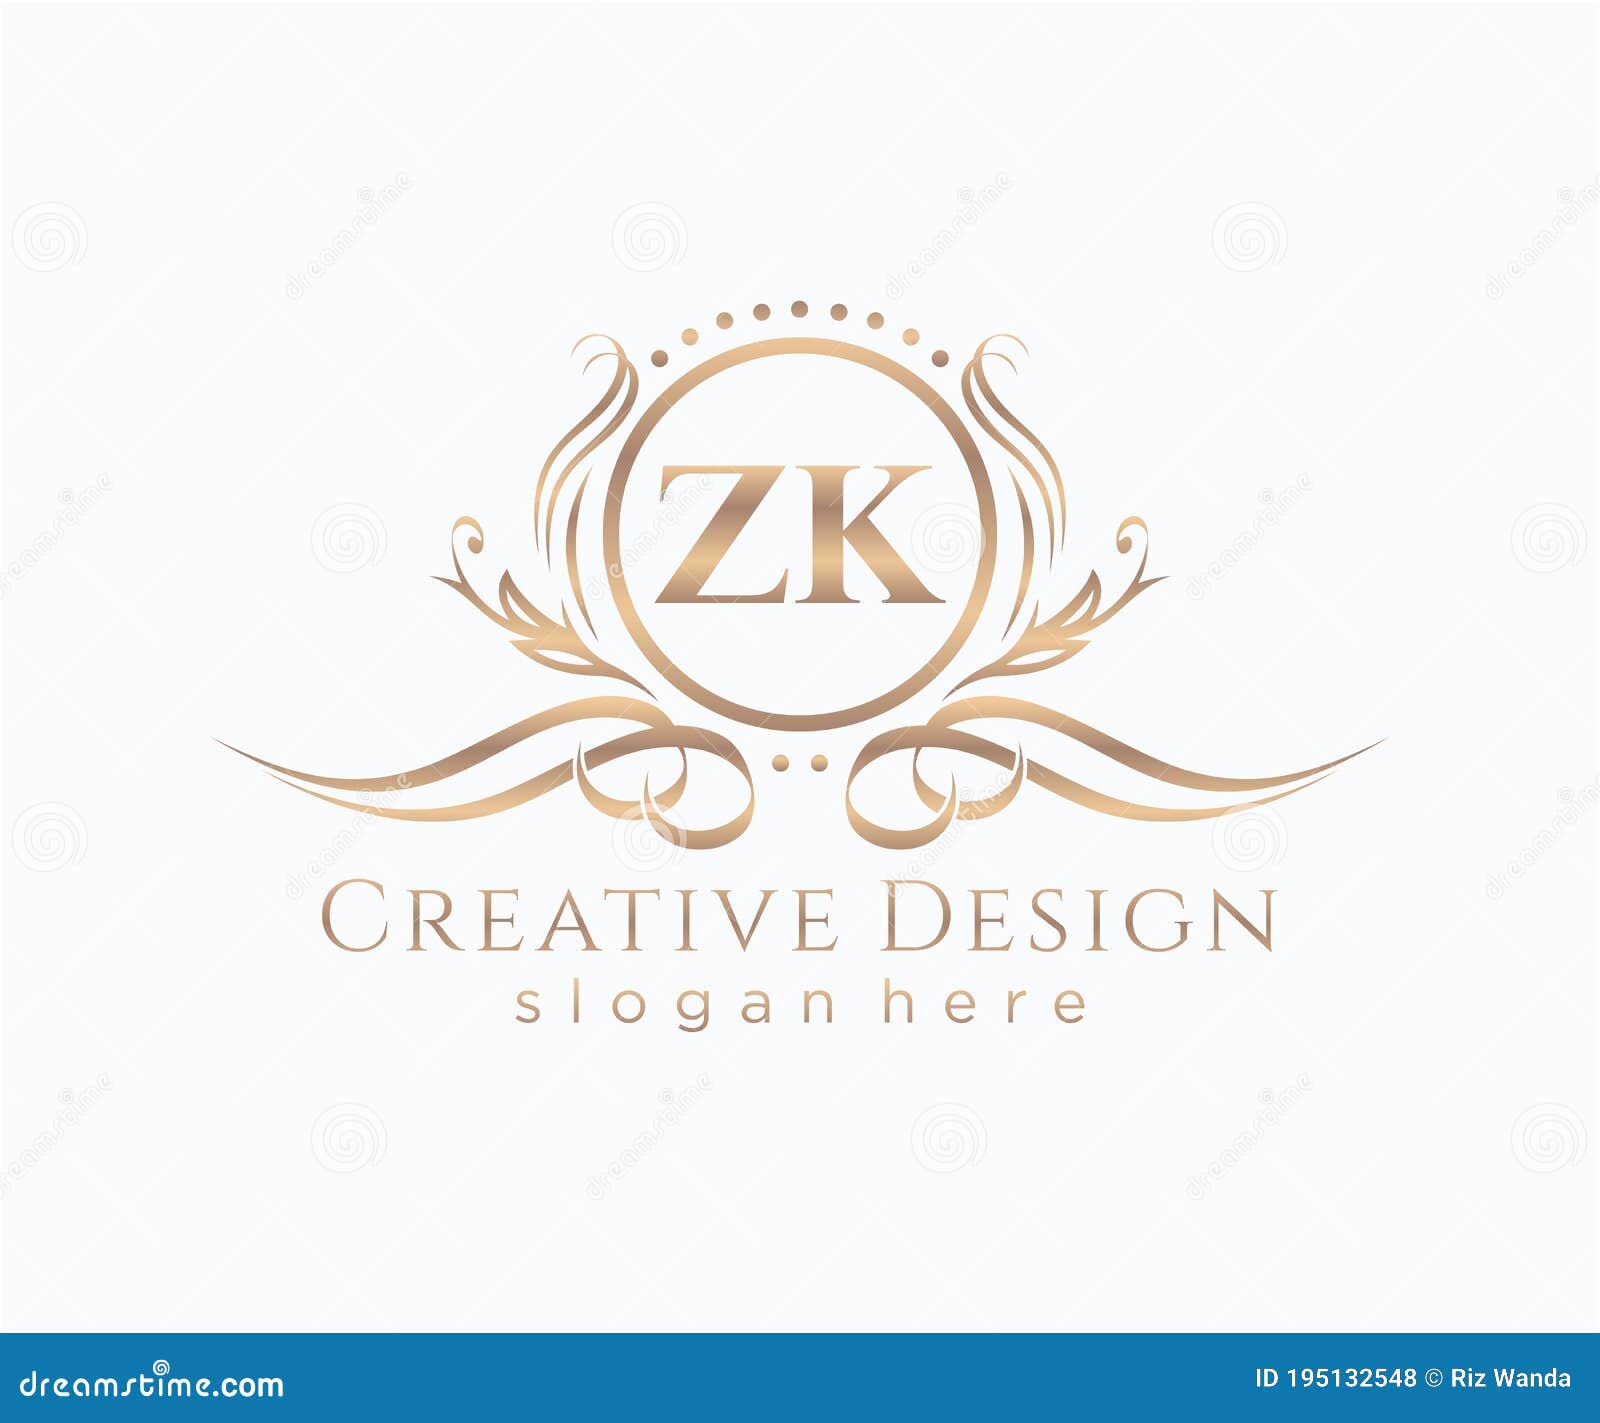 Nd Logo PNG Transparent & SVG Vector - Freebie Supply